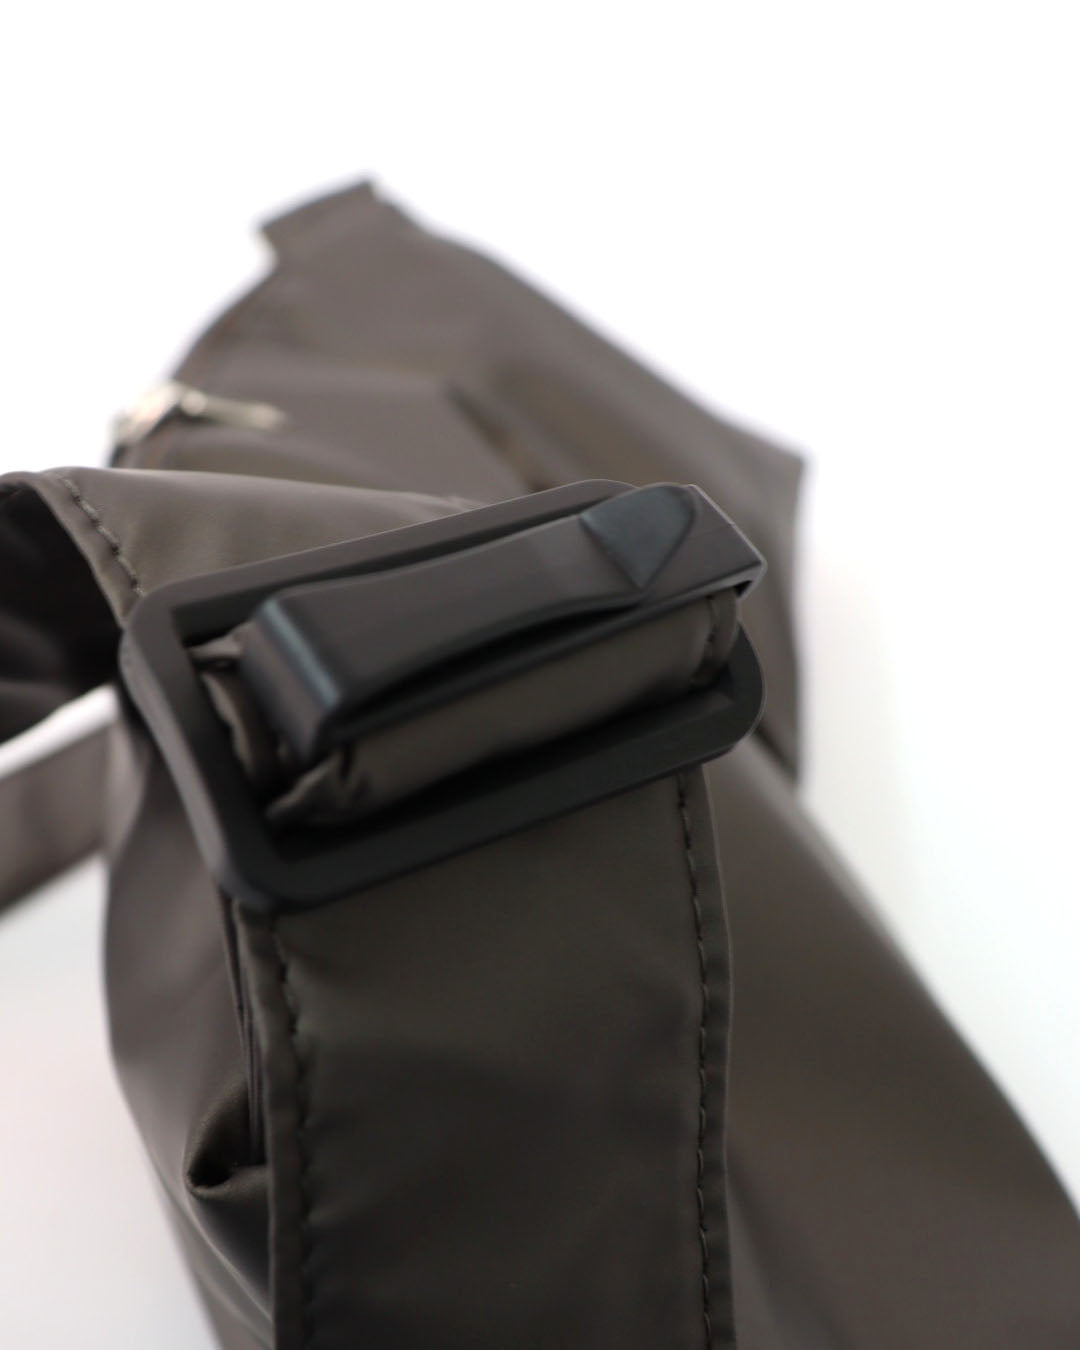 Signature ZZZ Bolster Sling/Shoulder Bag in Metallic Carbon